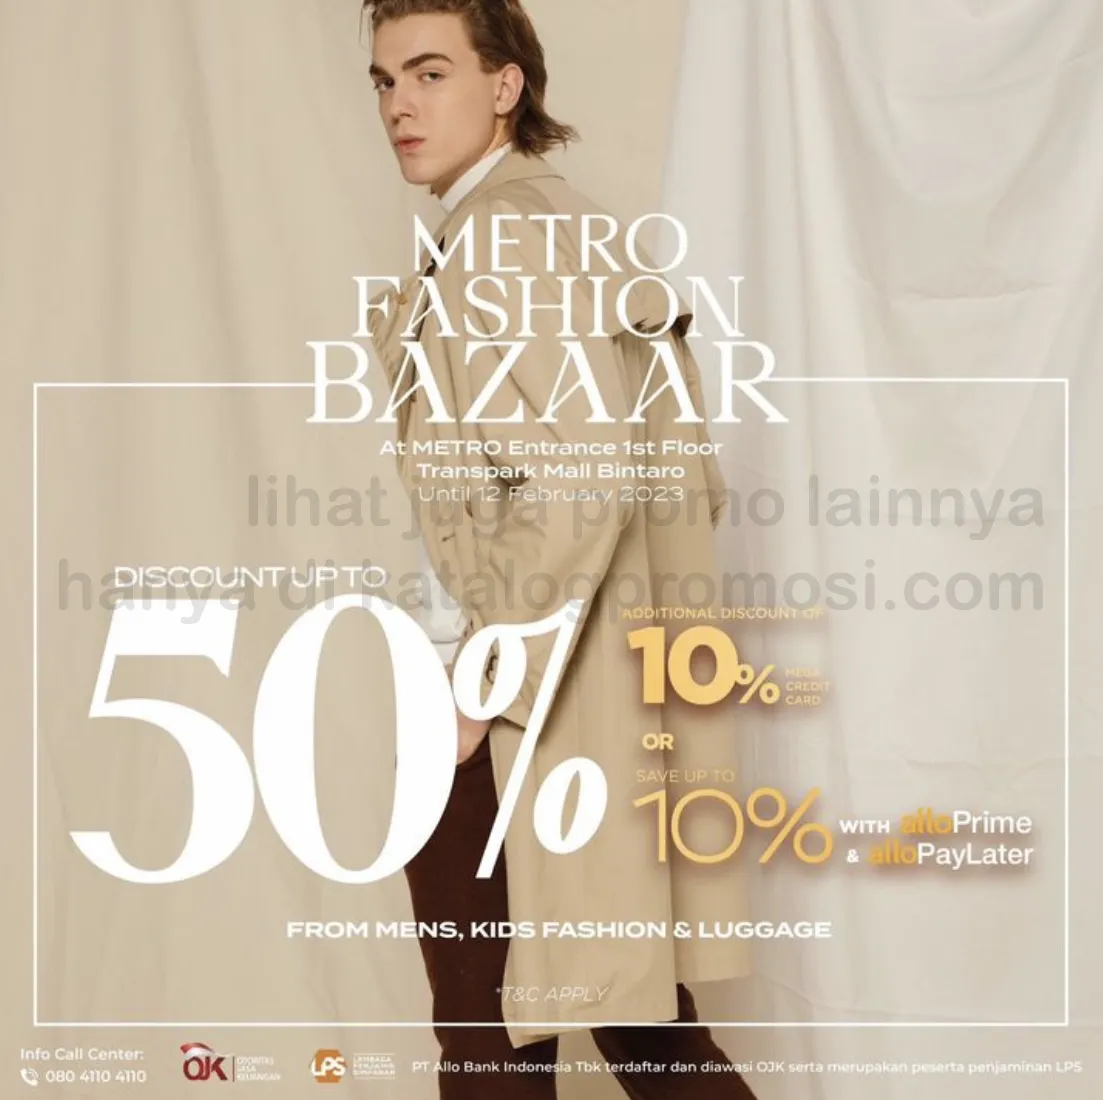 METRO FASHION BAZAAR di METRO Transpark Bintaro! Get discount up to 50% + 10%*